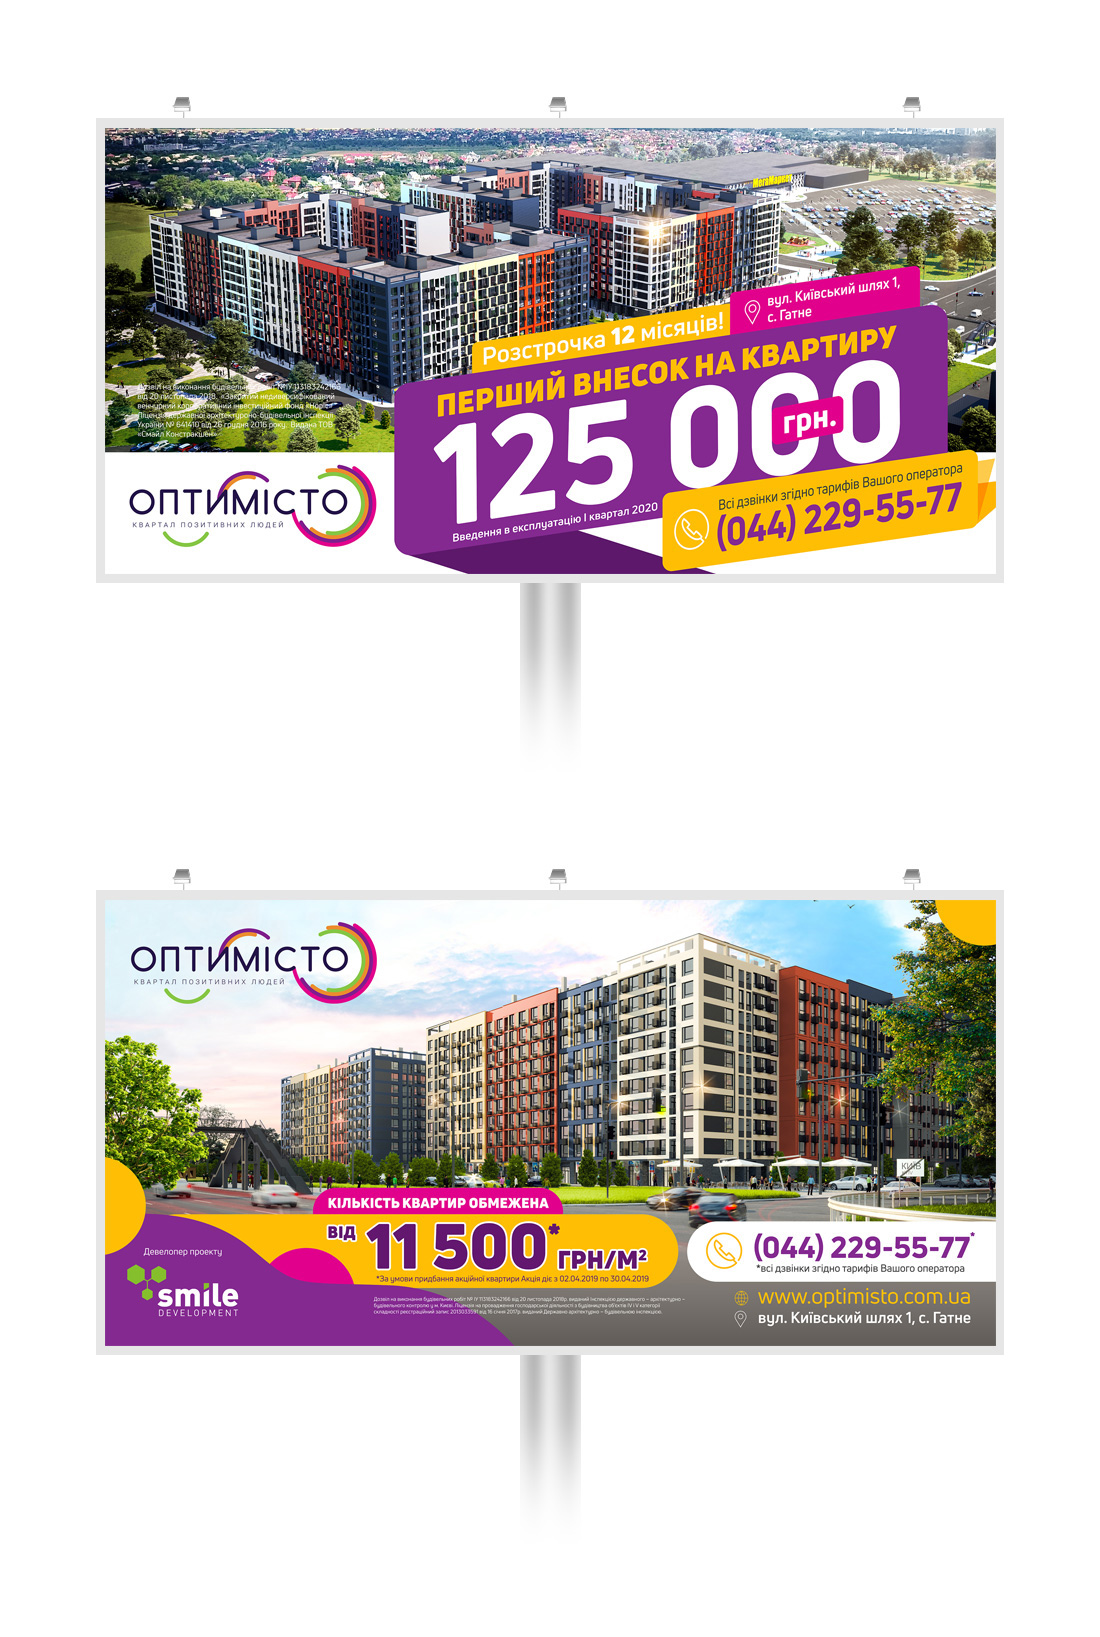 Graphic design of billboards for Optymisto